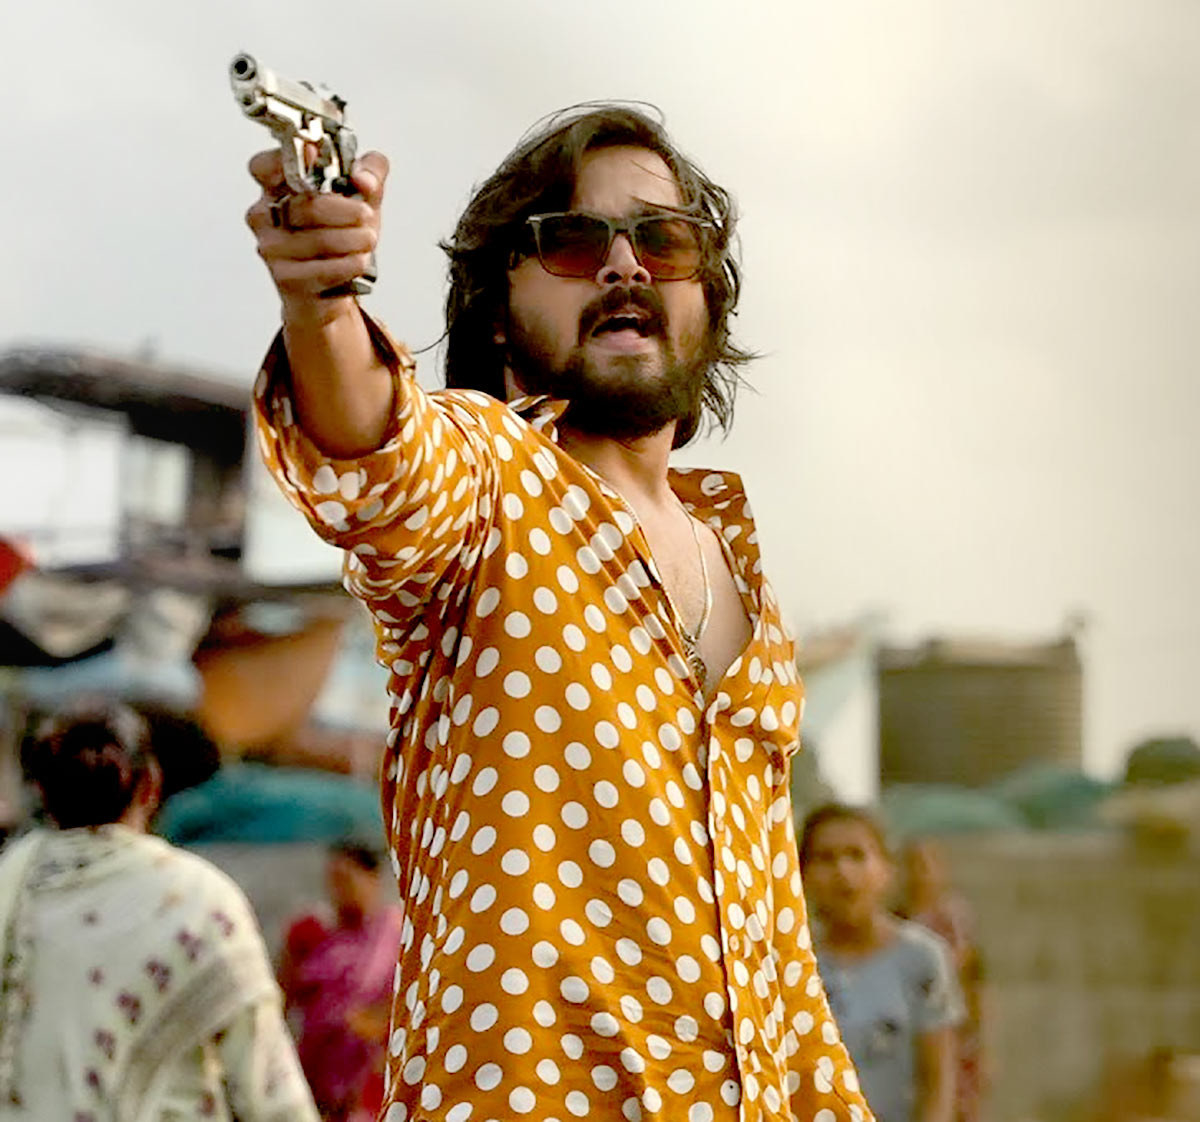 Bhuvan, wearing sunglasses, points a gun at someone